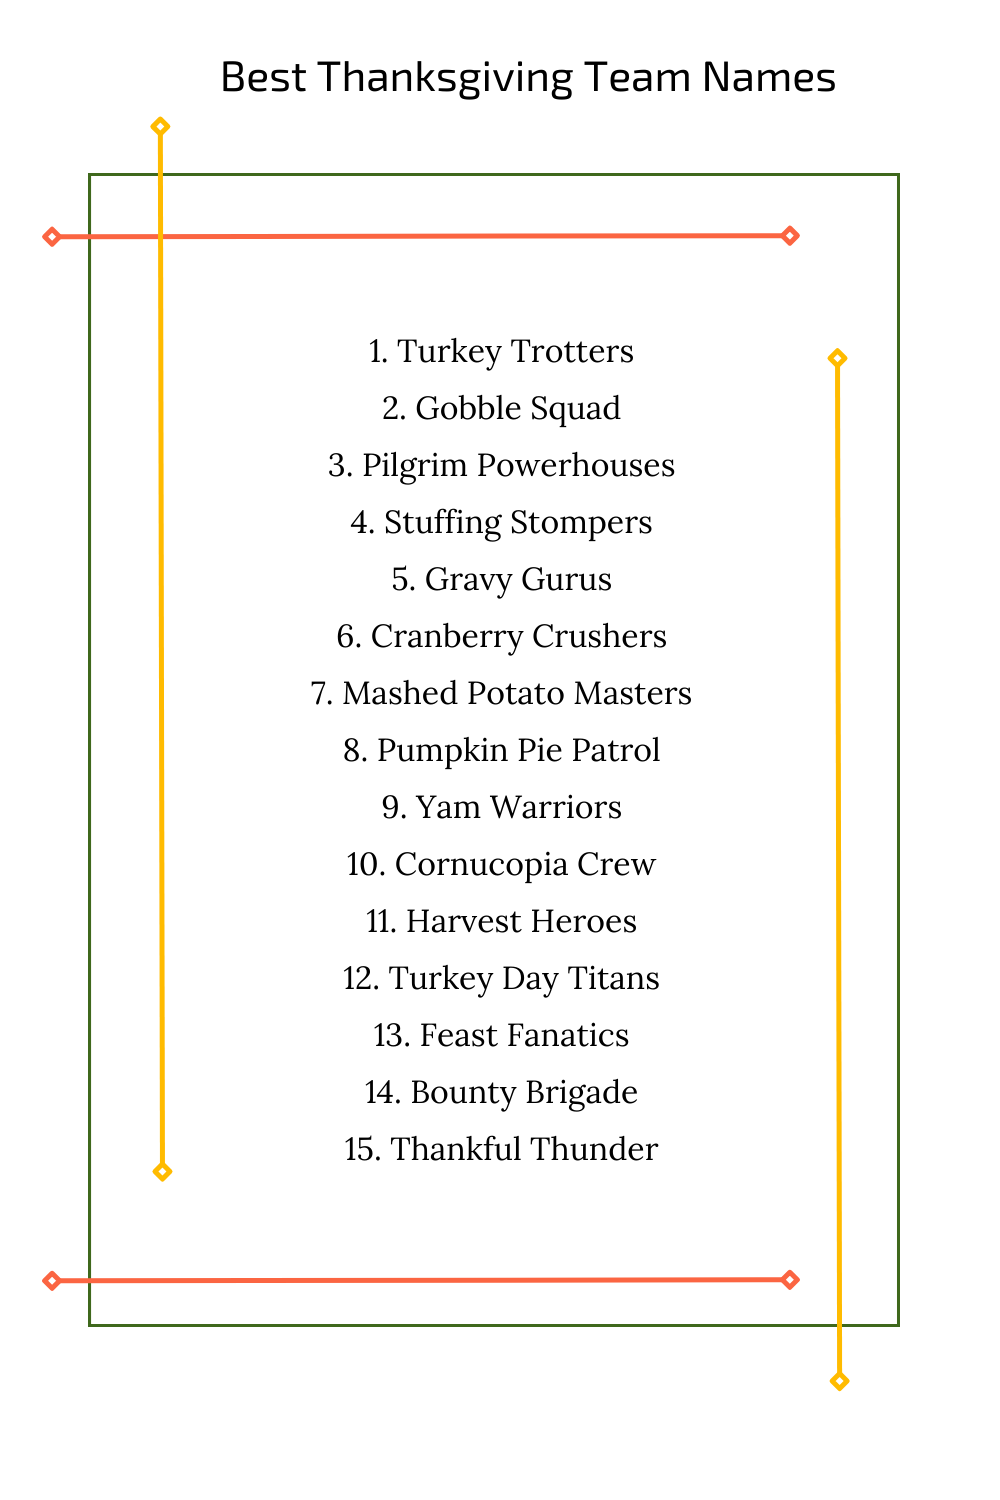 Best Thanksgiving Team Names